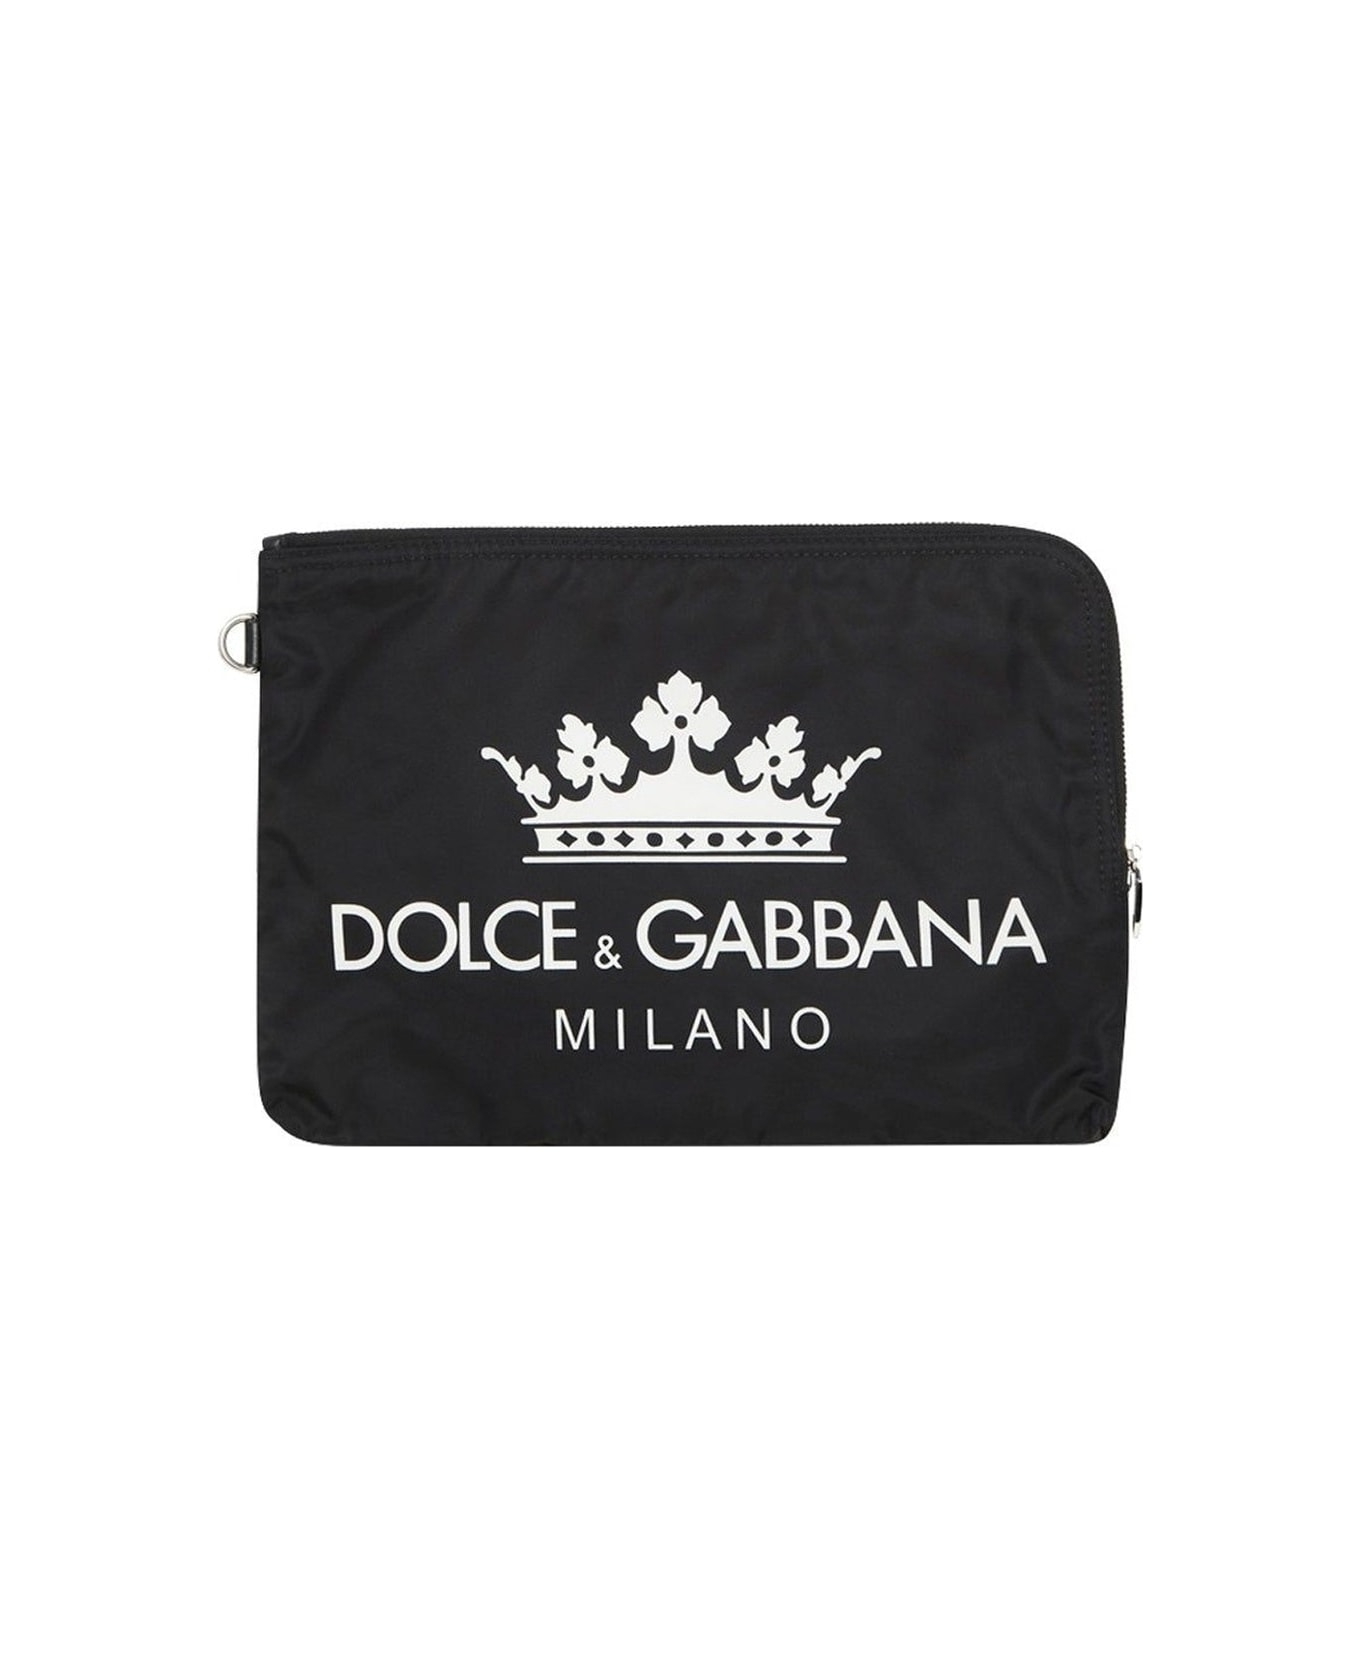 Dolce & Gabbana Logo Clutch - Black バッグ